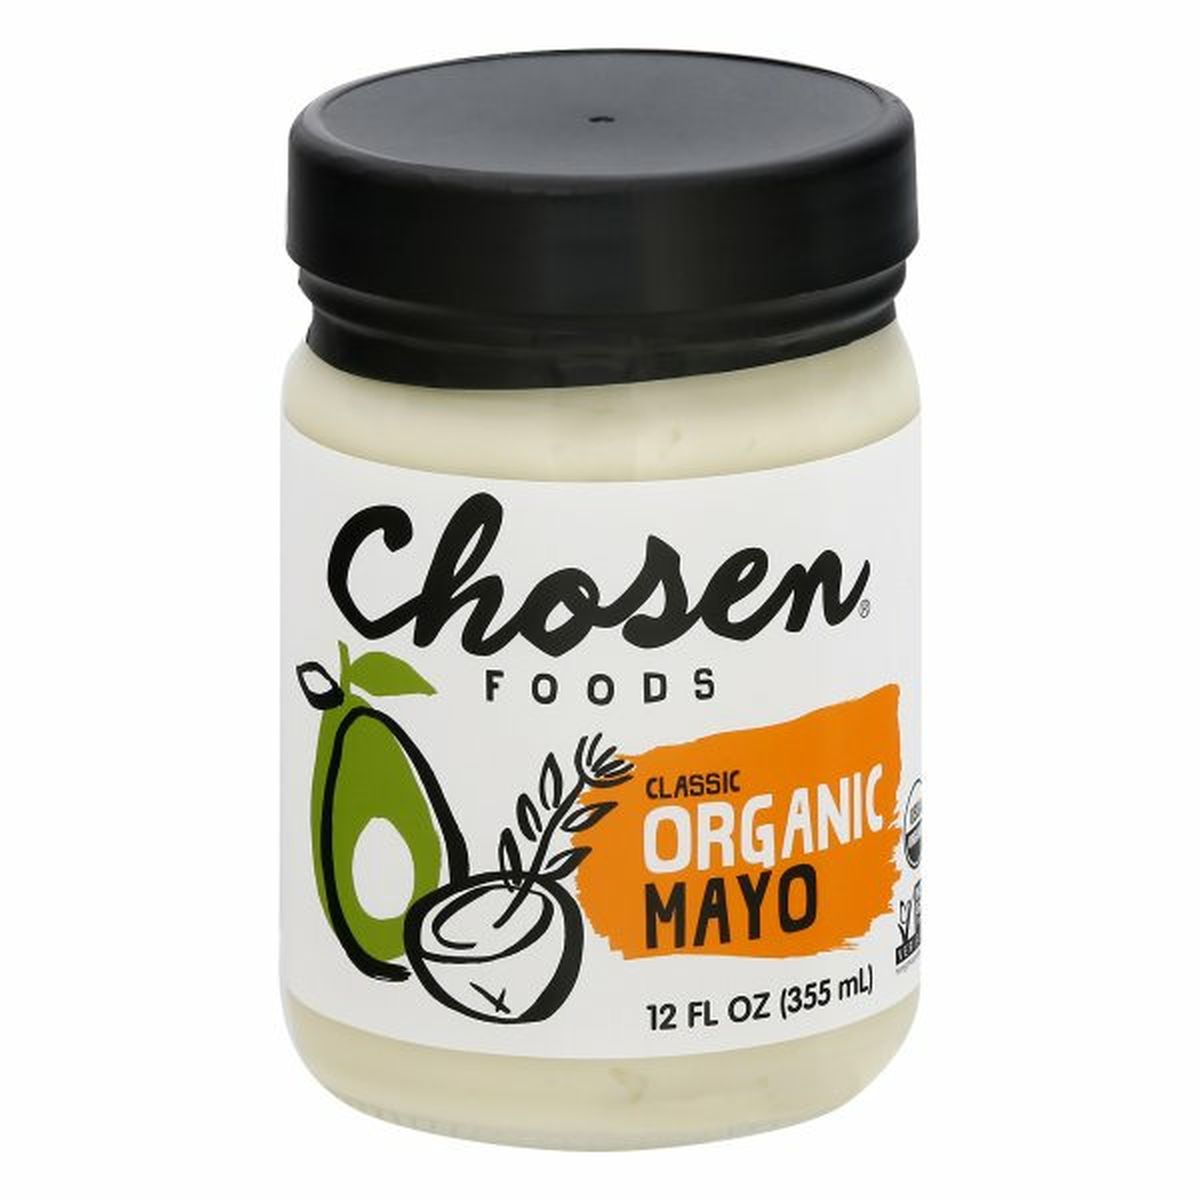 Calories in Chosen Foods Mayo, Organic, Classic